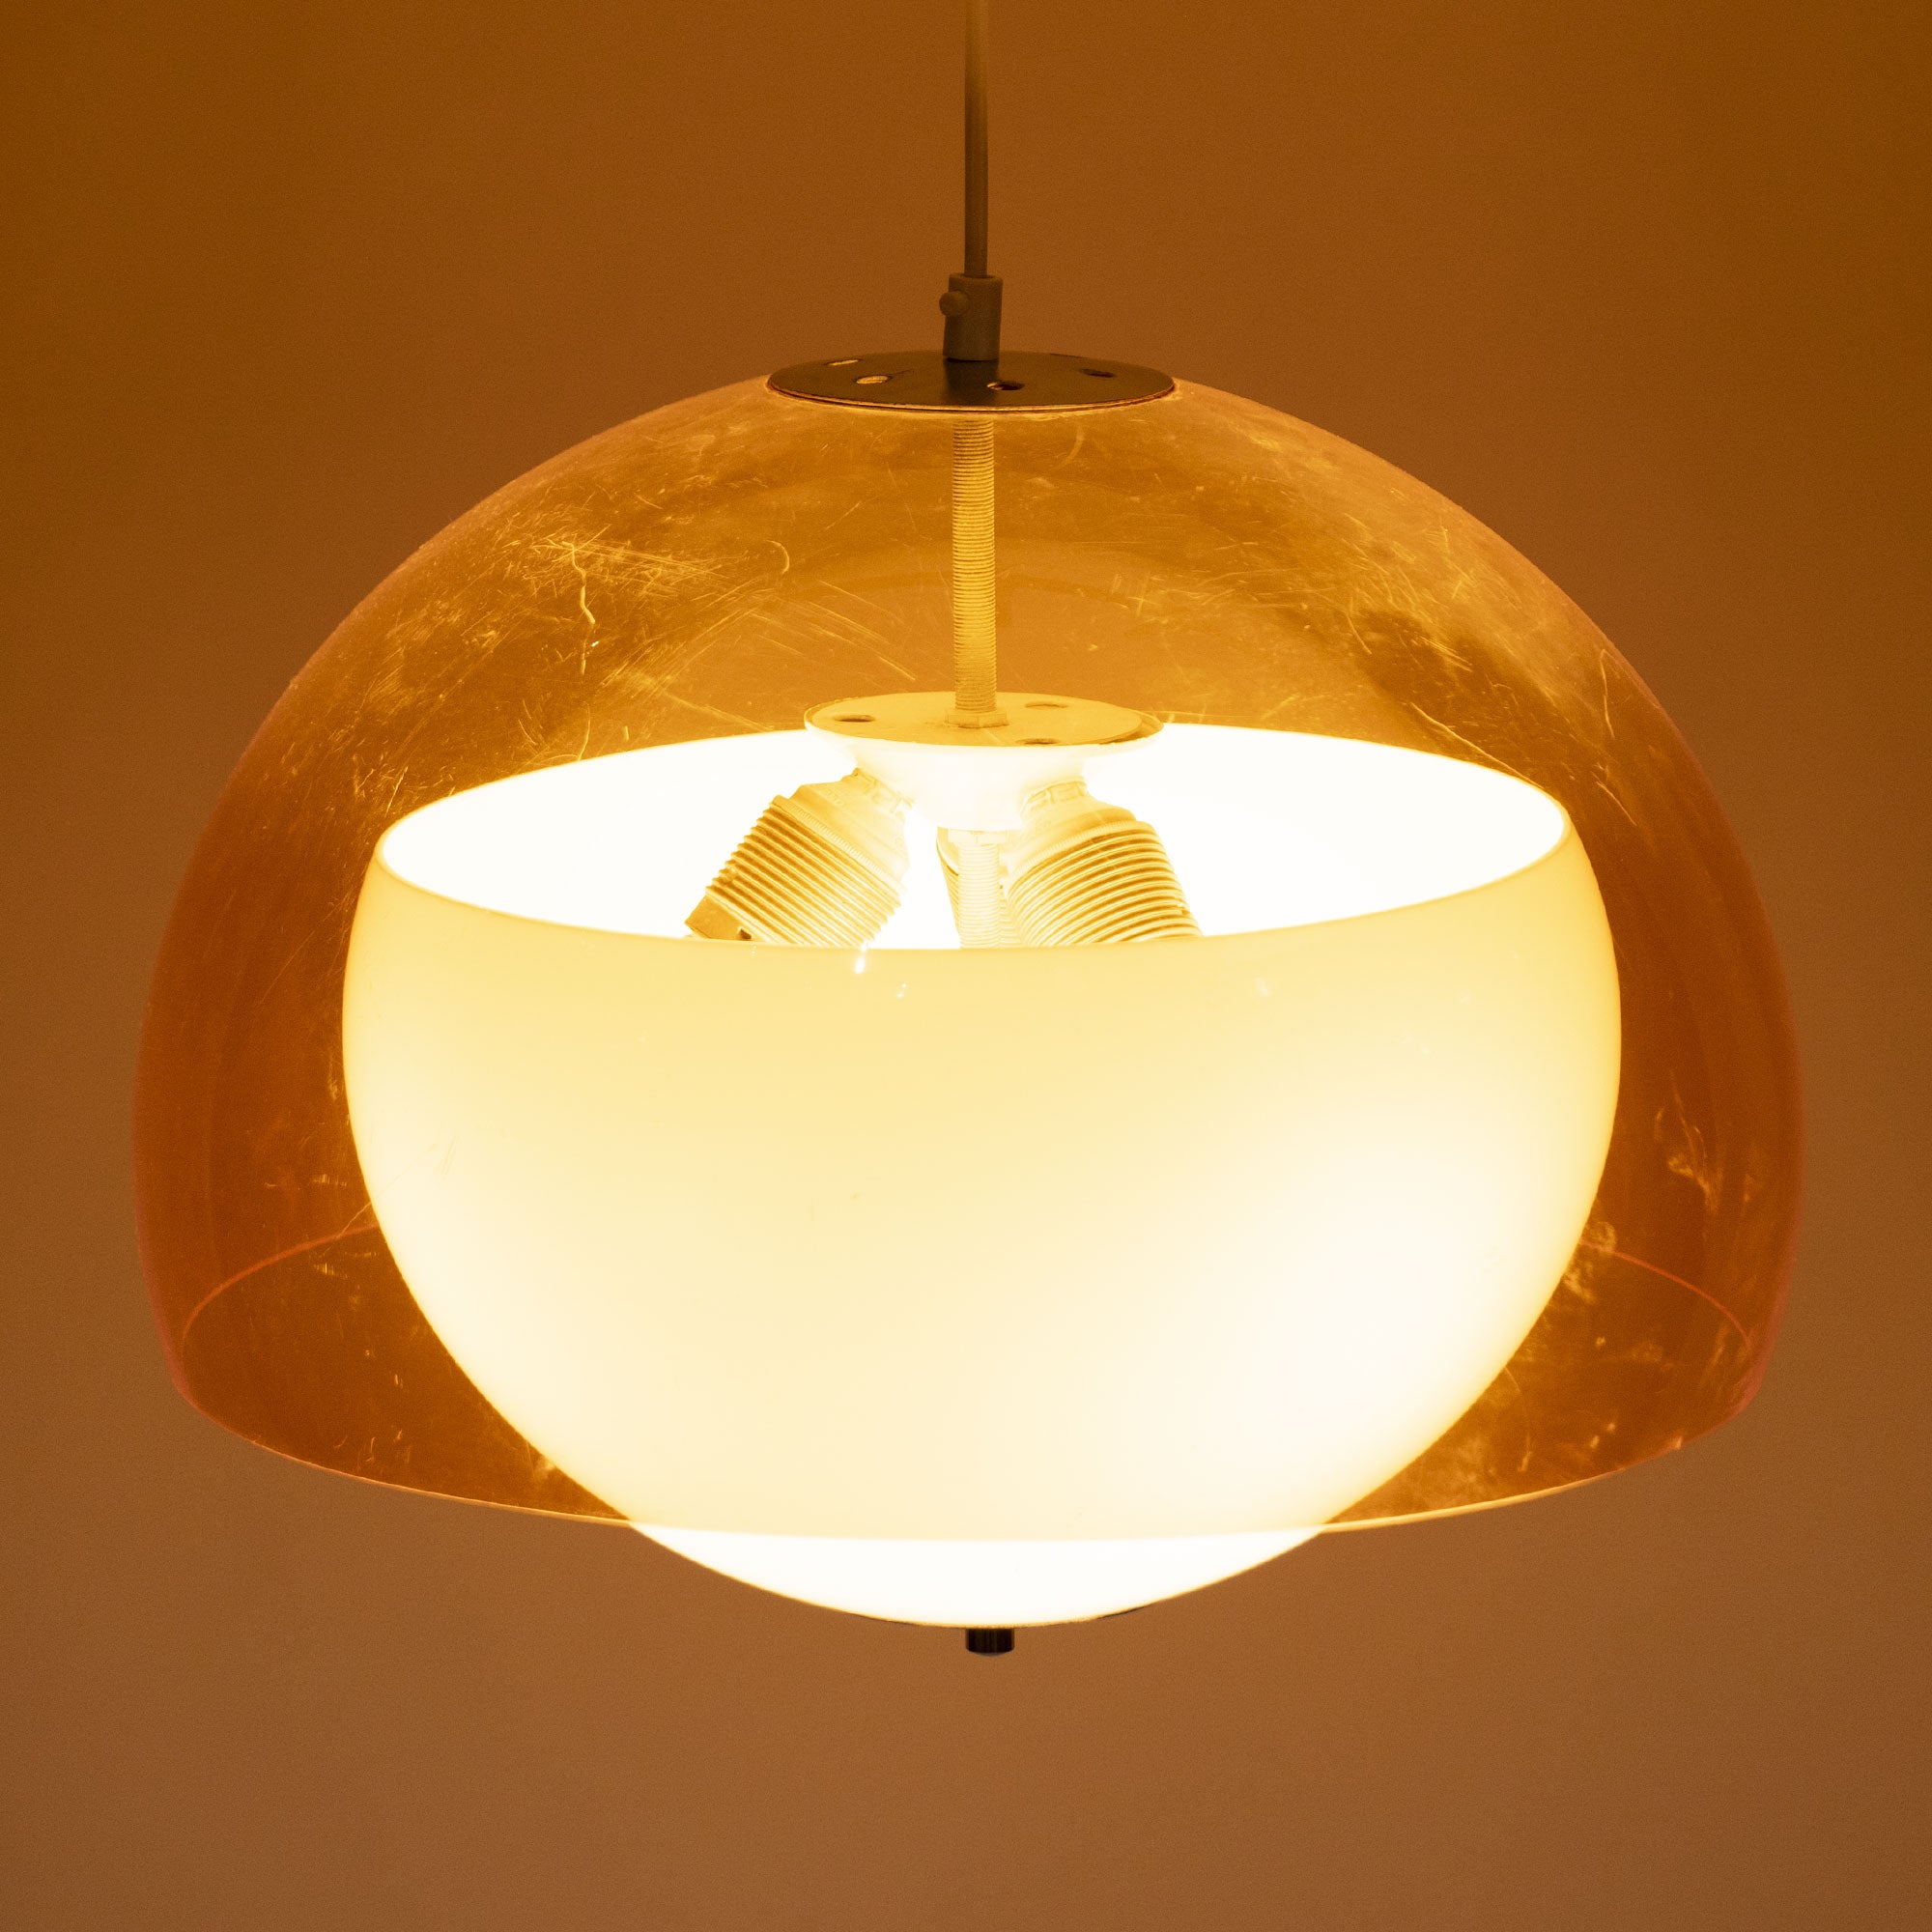 Orange And White Ball Pendant Lamp